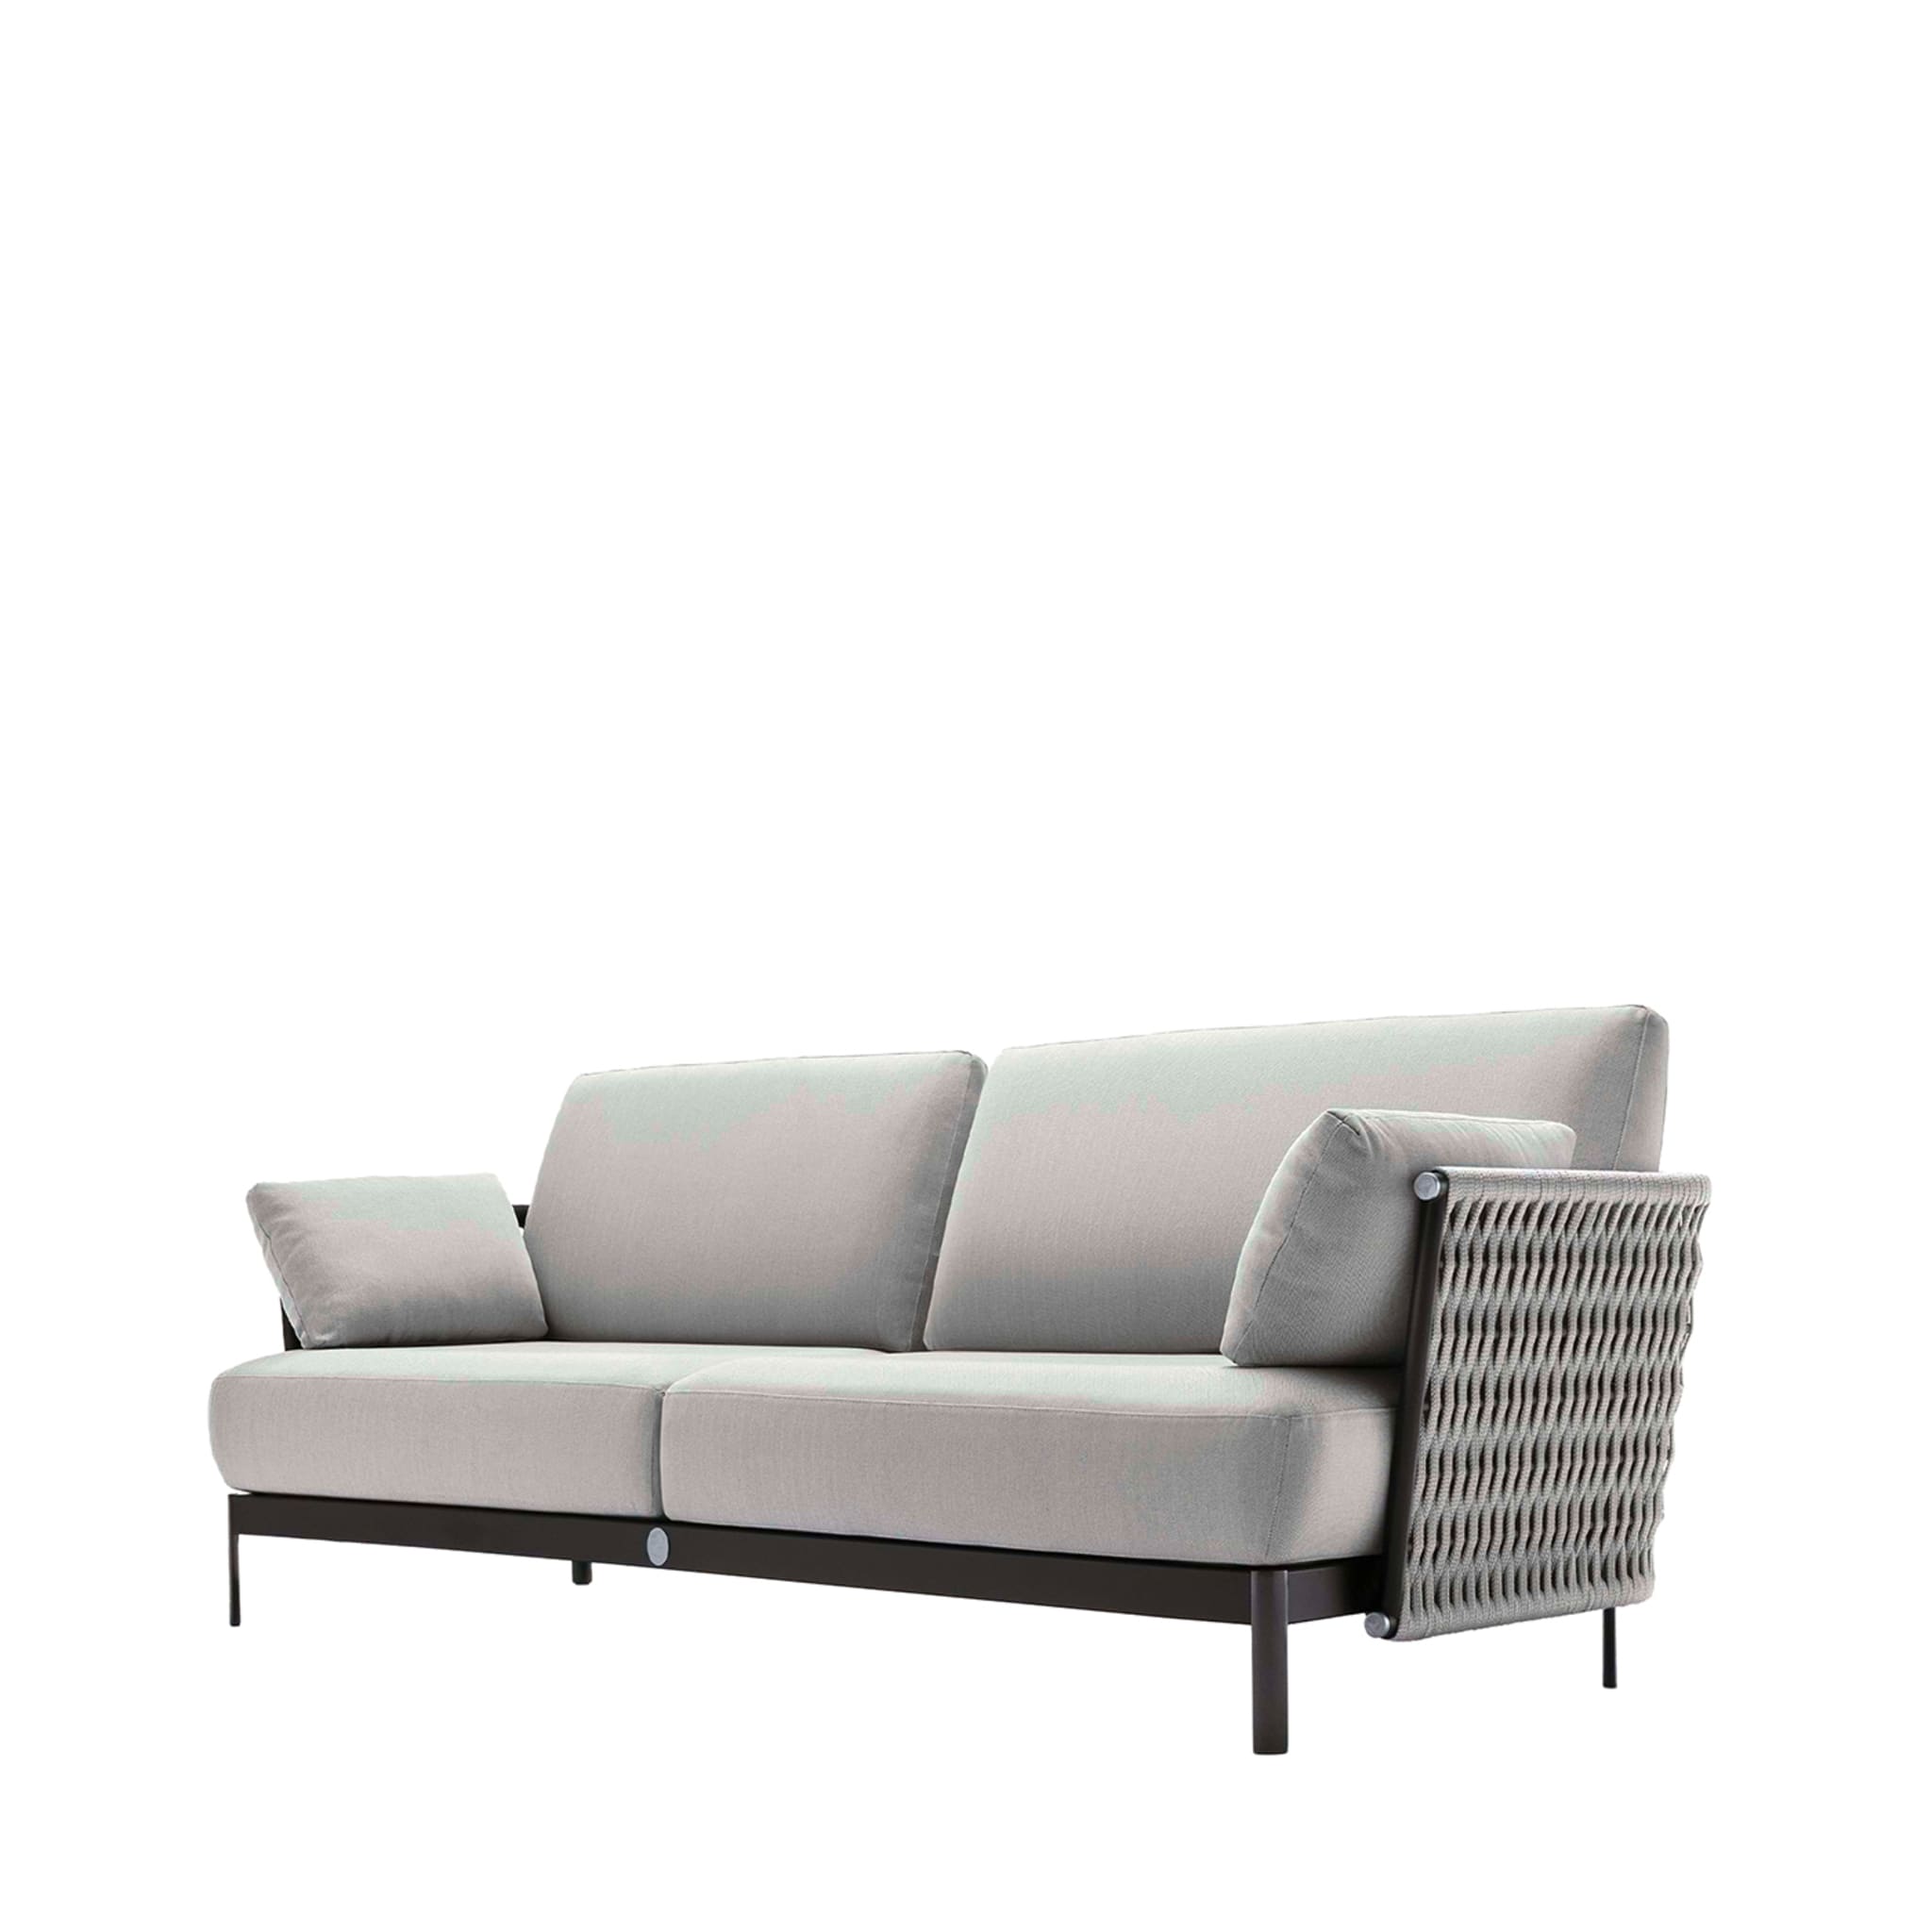 2 Seats Gray Outdoor fabric Sofa - Main view